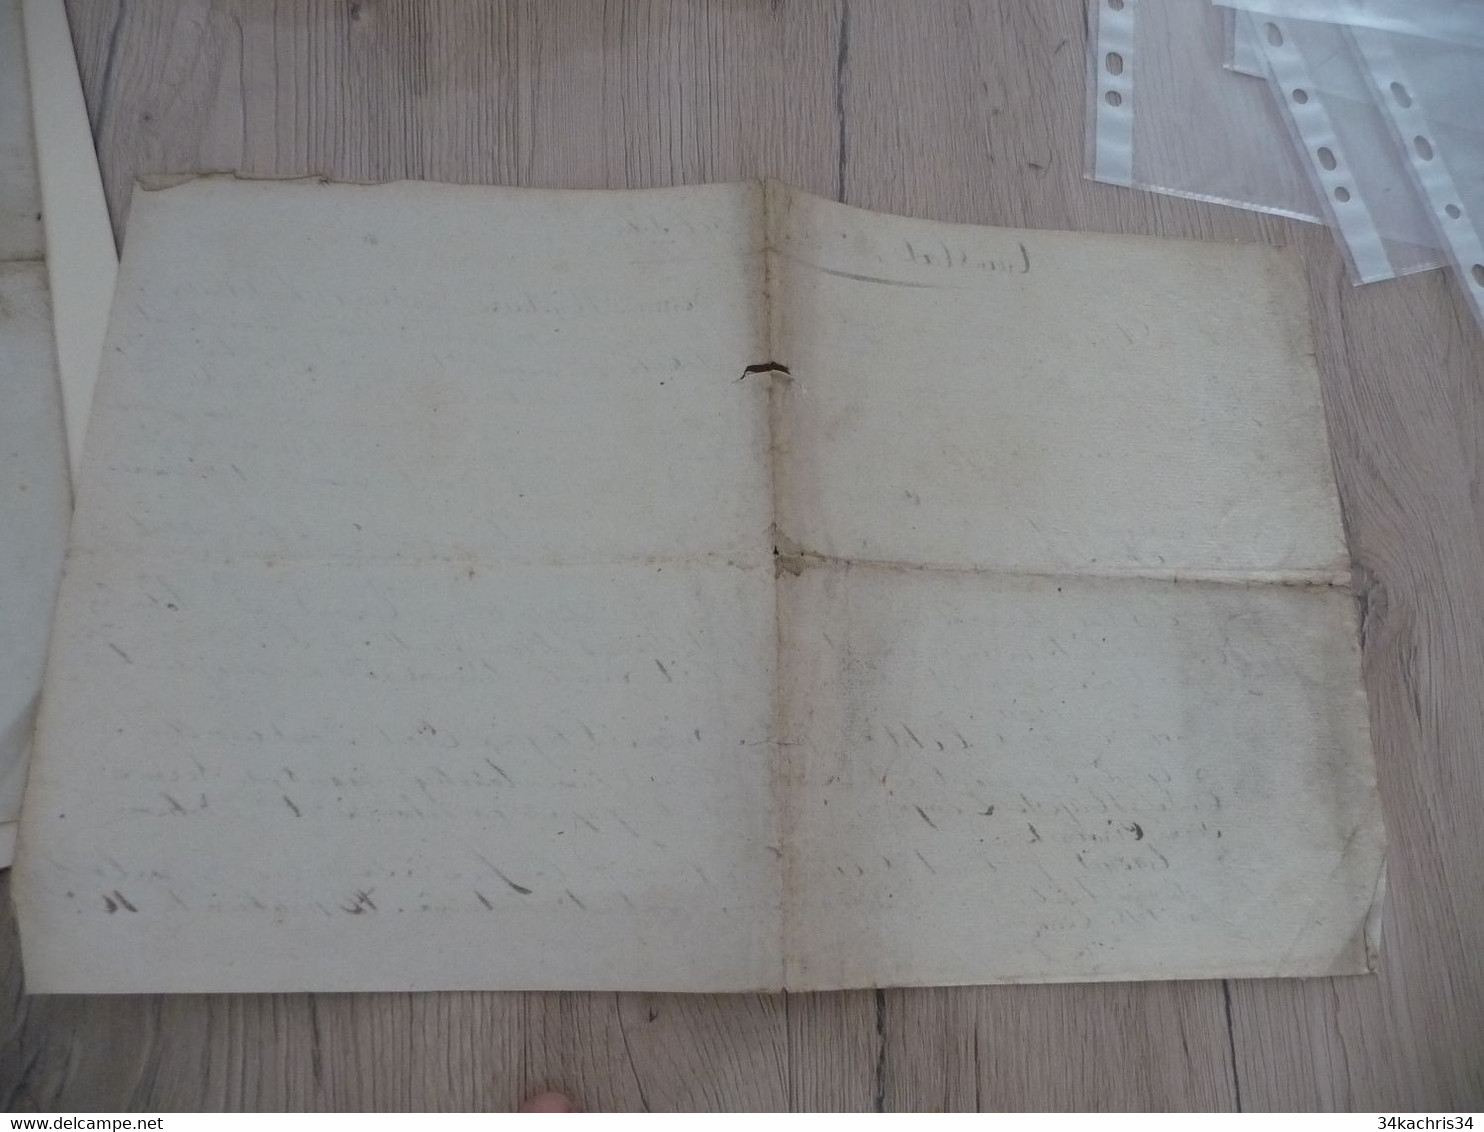 Haut Rhin Demande Pension + Congé Absolu Niedhard Régiment Dragons Price Rosenberg 1818 Autographes - Documentos